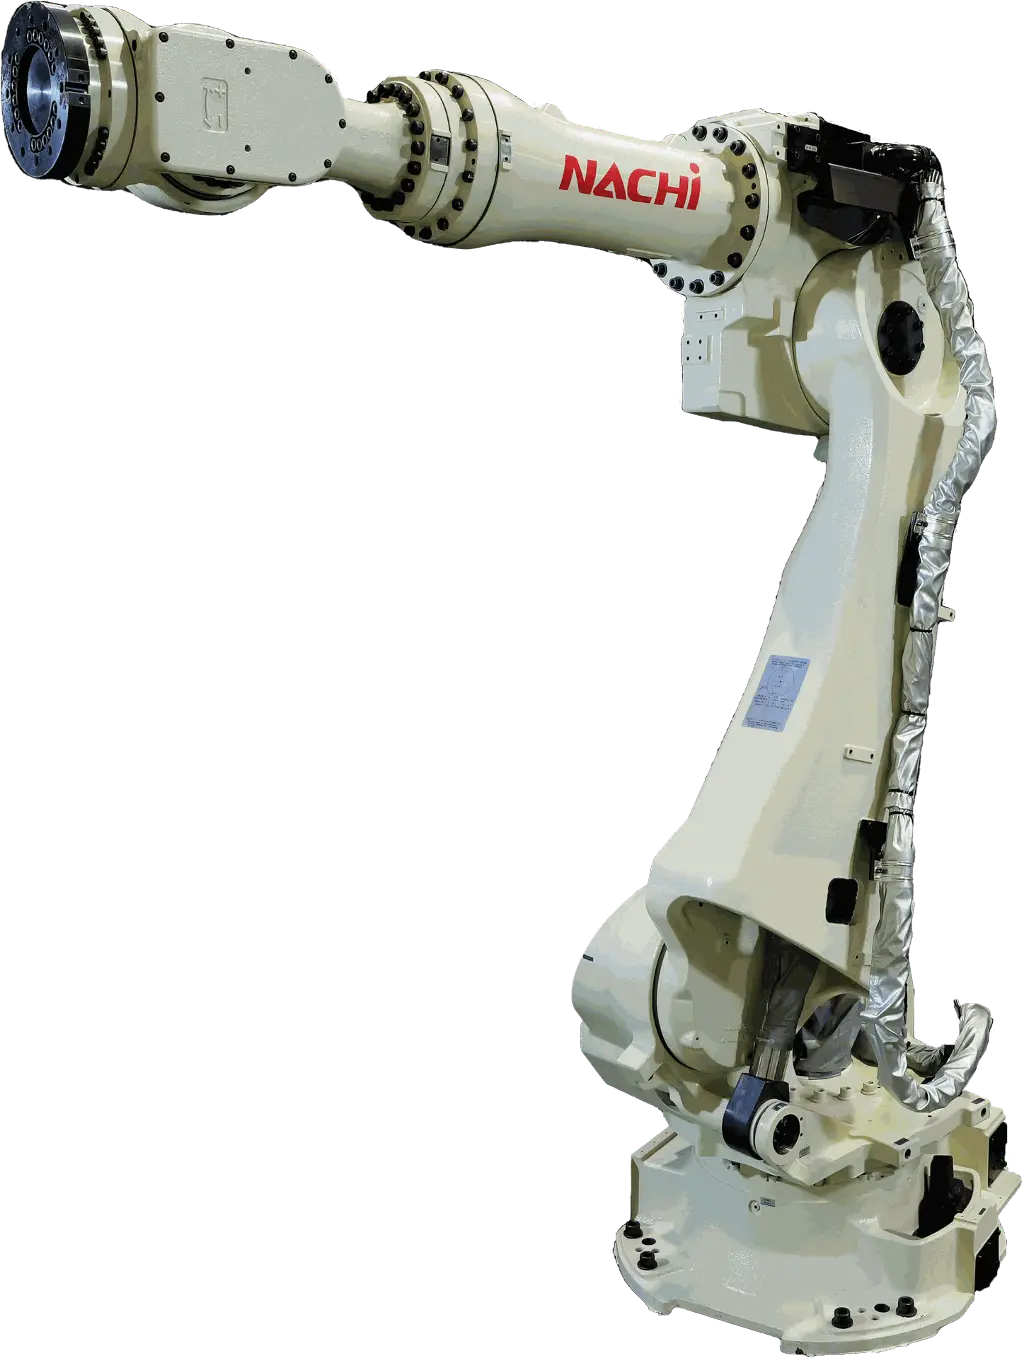 SRA300 Heavy duty and spot welding robot From Nachi